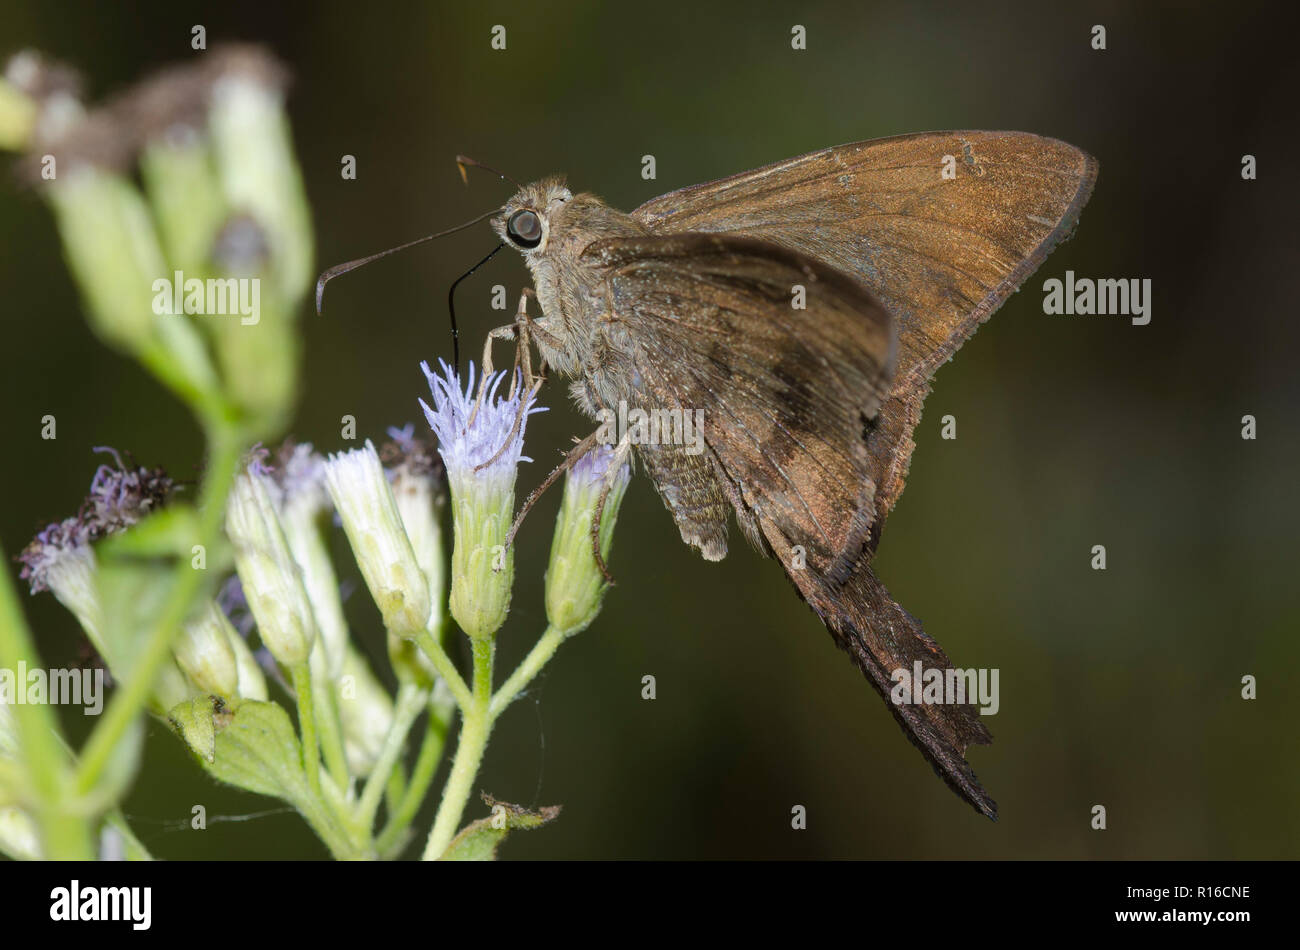 Brown Longtail, Spicauda procne, male on mist flower, Conoclinium sp. Stock Photo